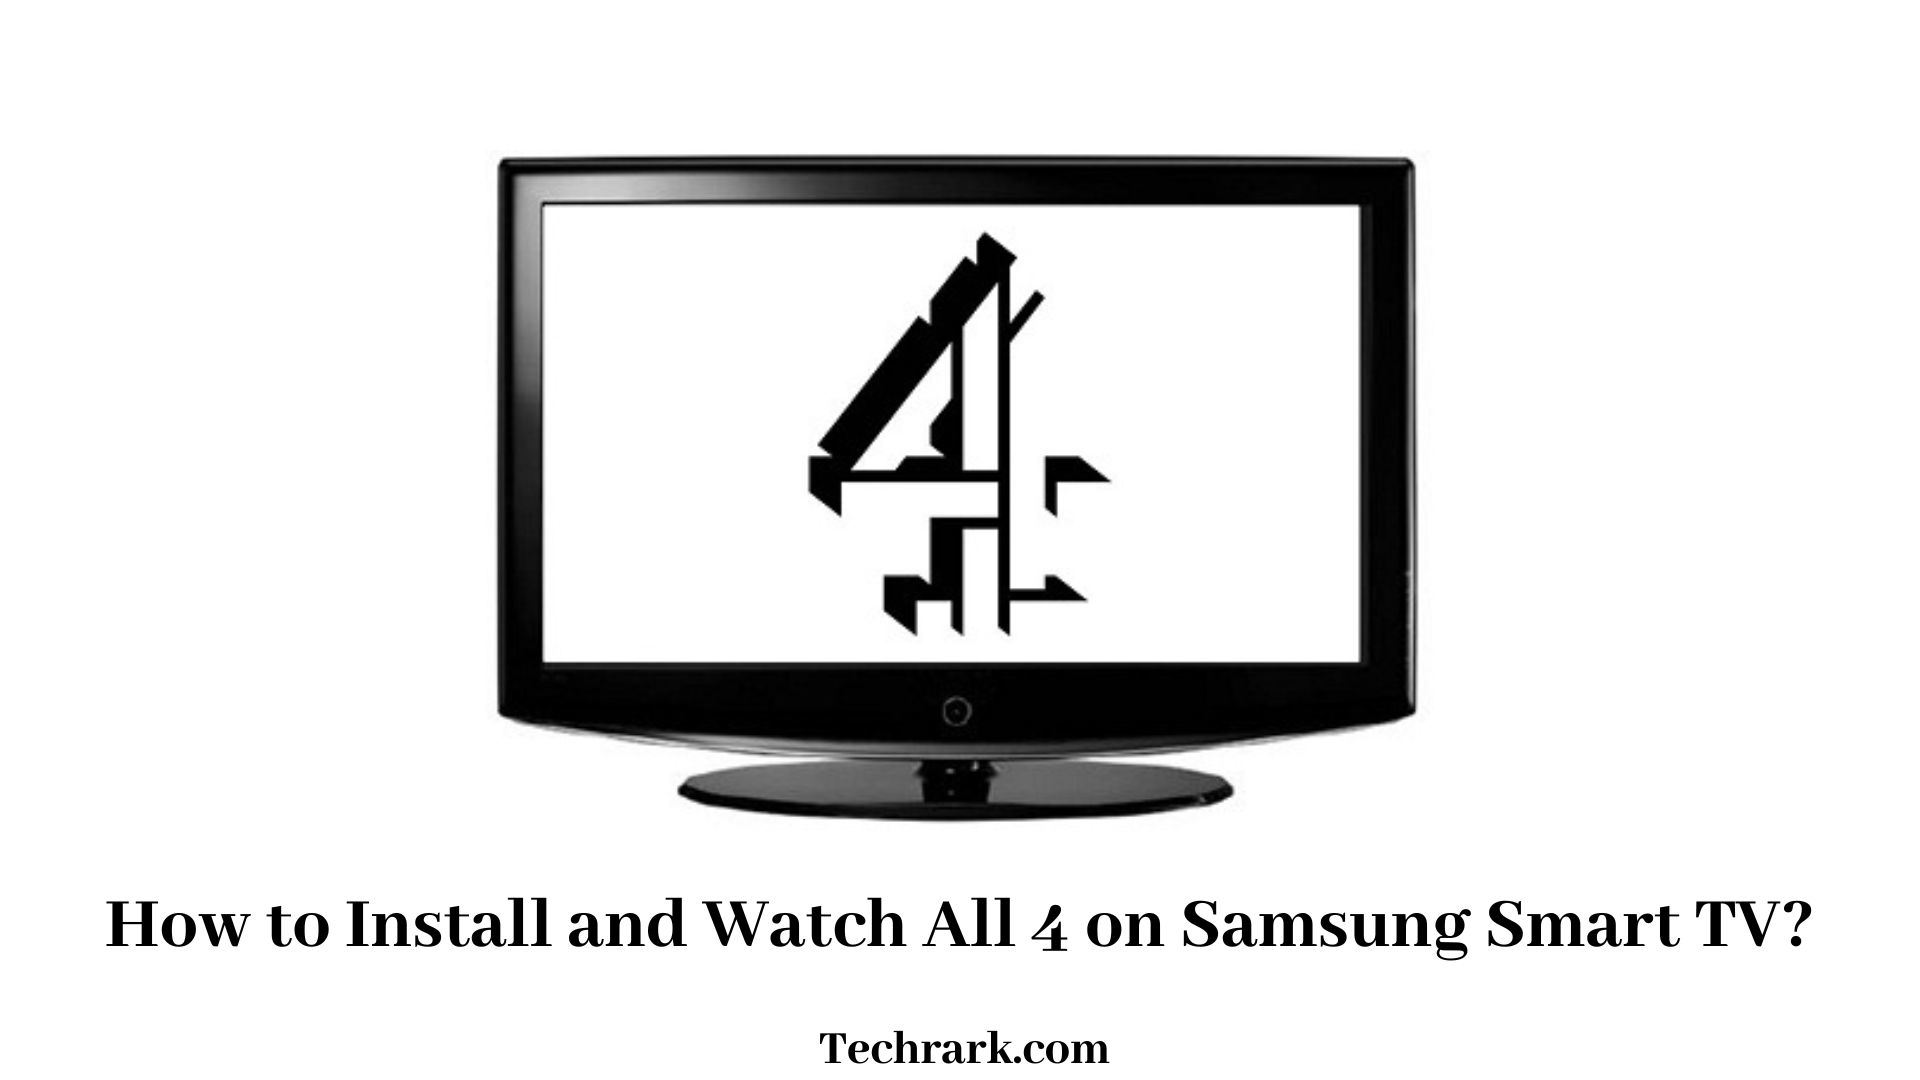 ALL 4 on Samsung TV